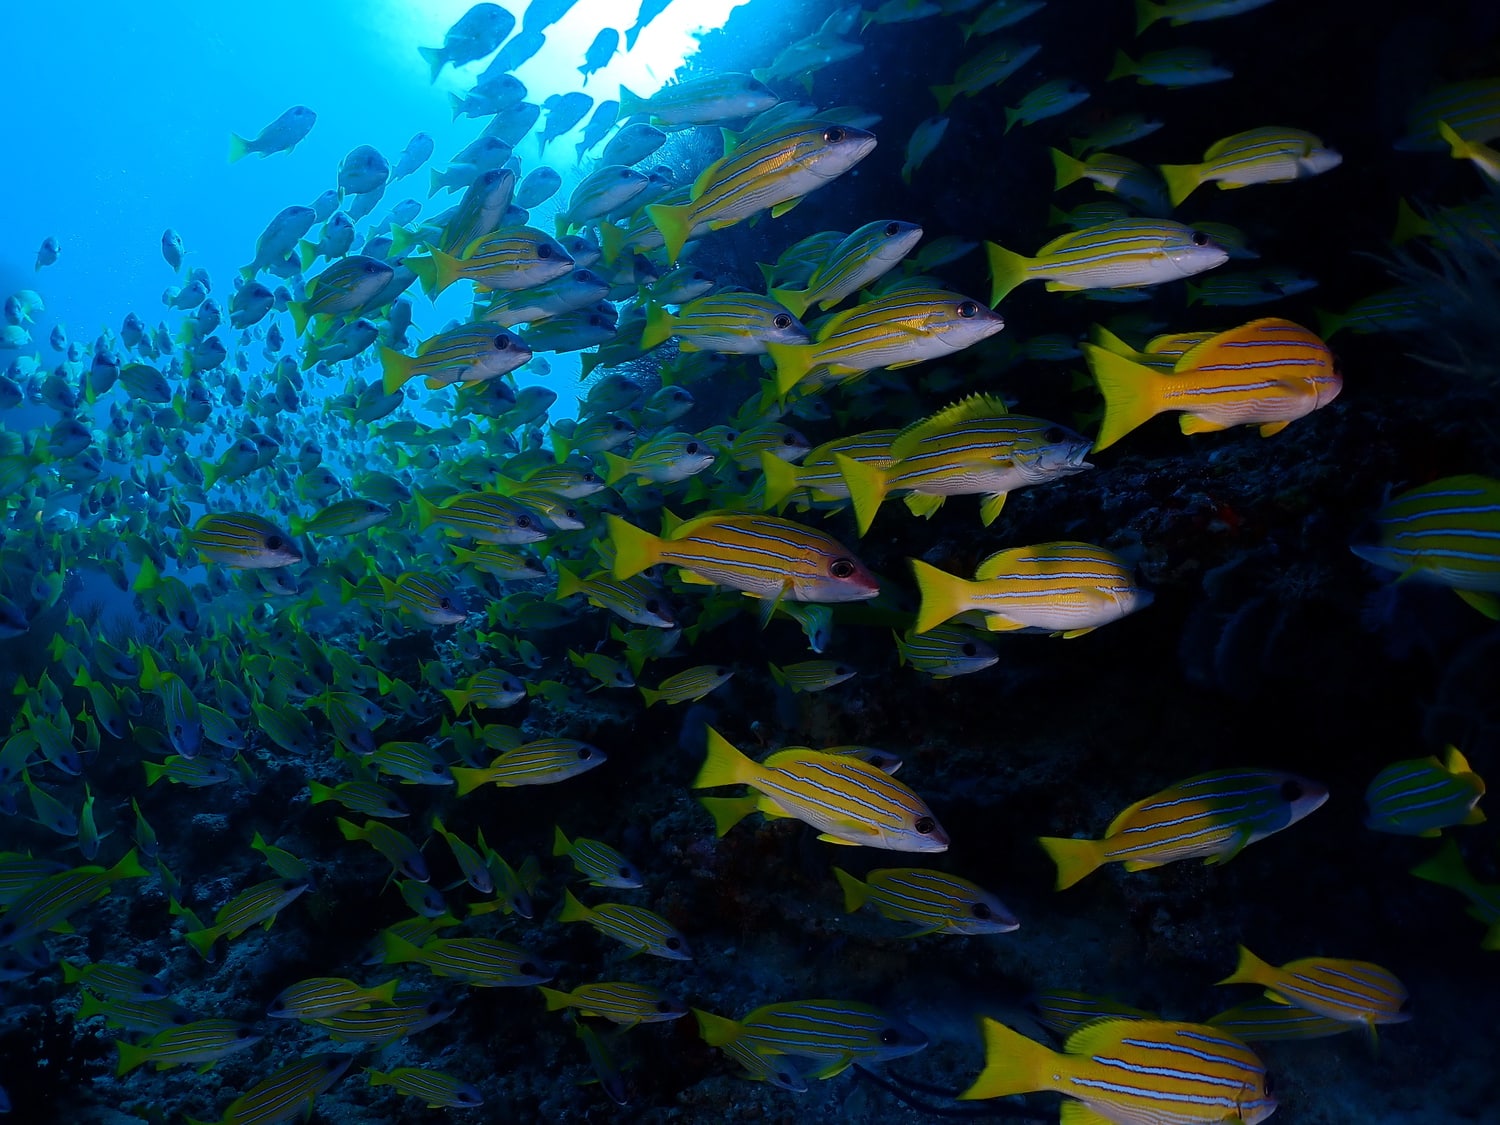 fish photo with olympus tough tg-6 underwater camera